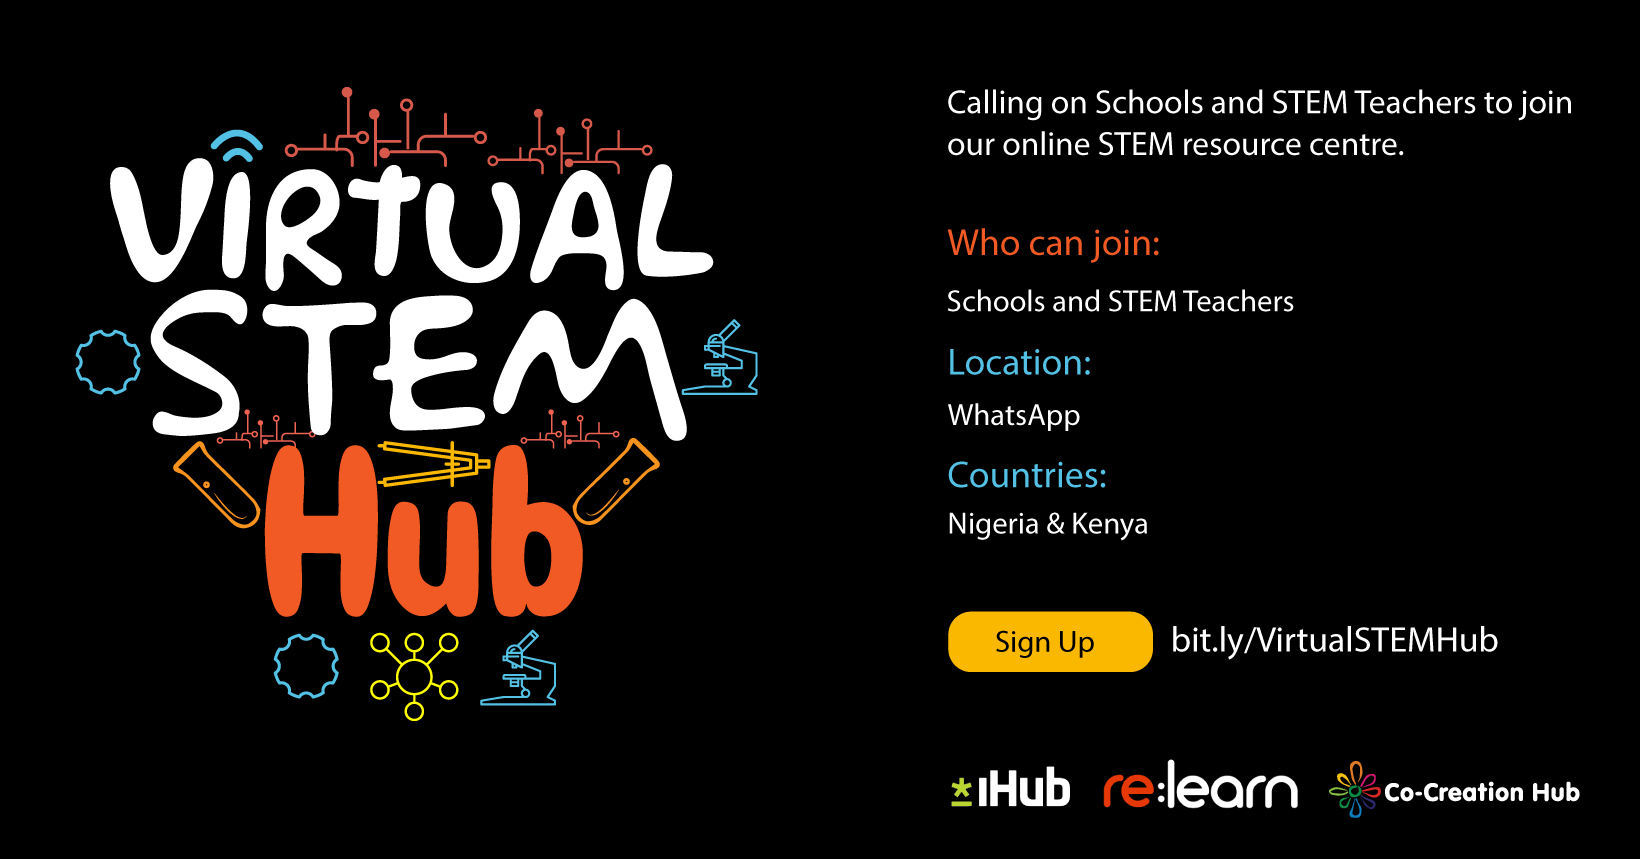 re:learn Virtual STEM Hub 2020 for Schools and STEM Teachers in Nigeria and Kenya